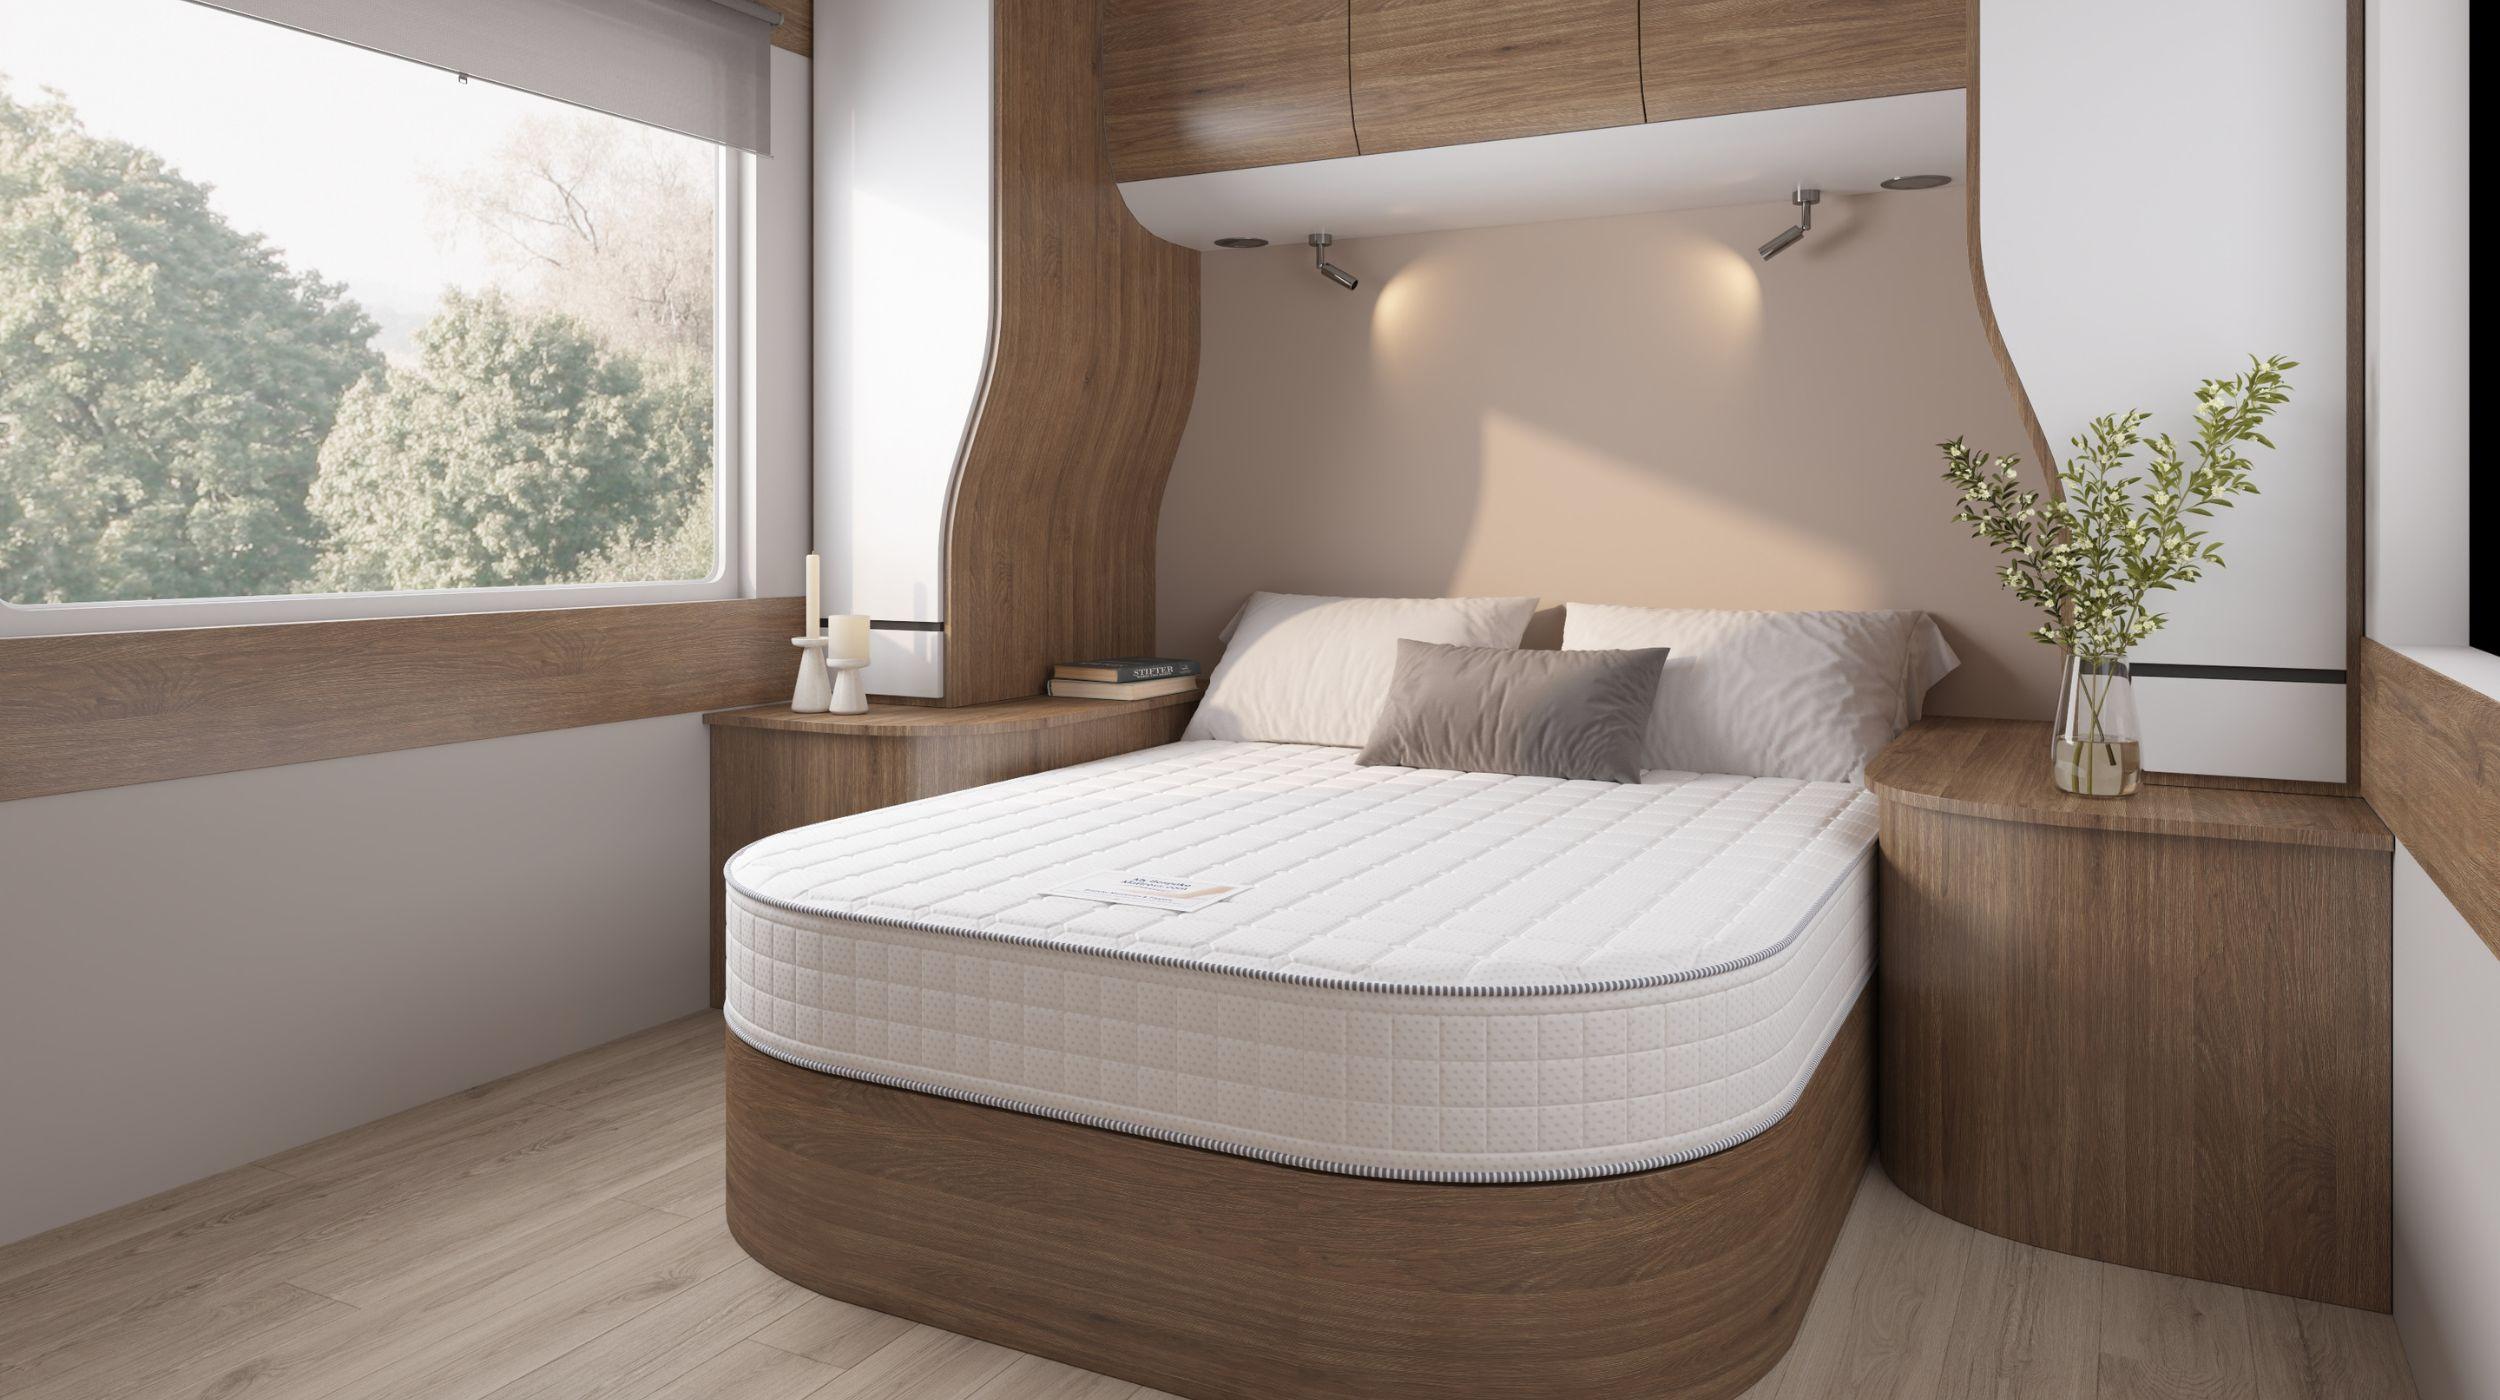 Custom-shaped island bed caravan mattress showcased within a spacious and modern caravan.